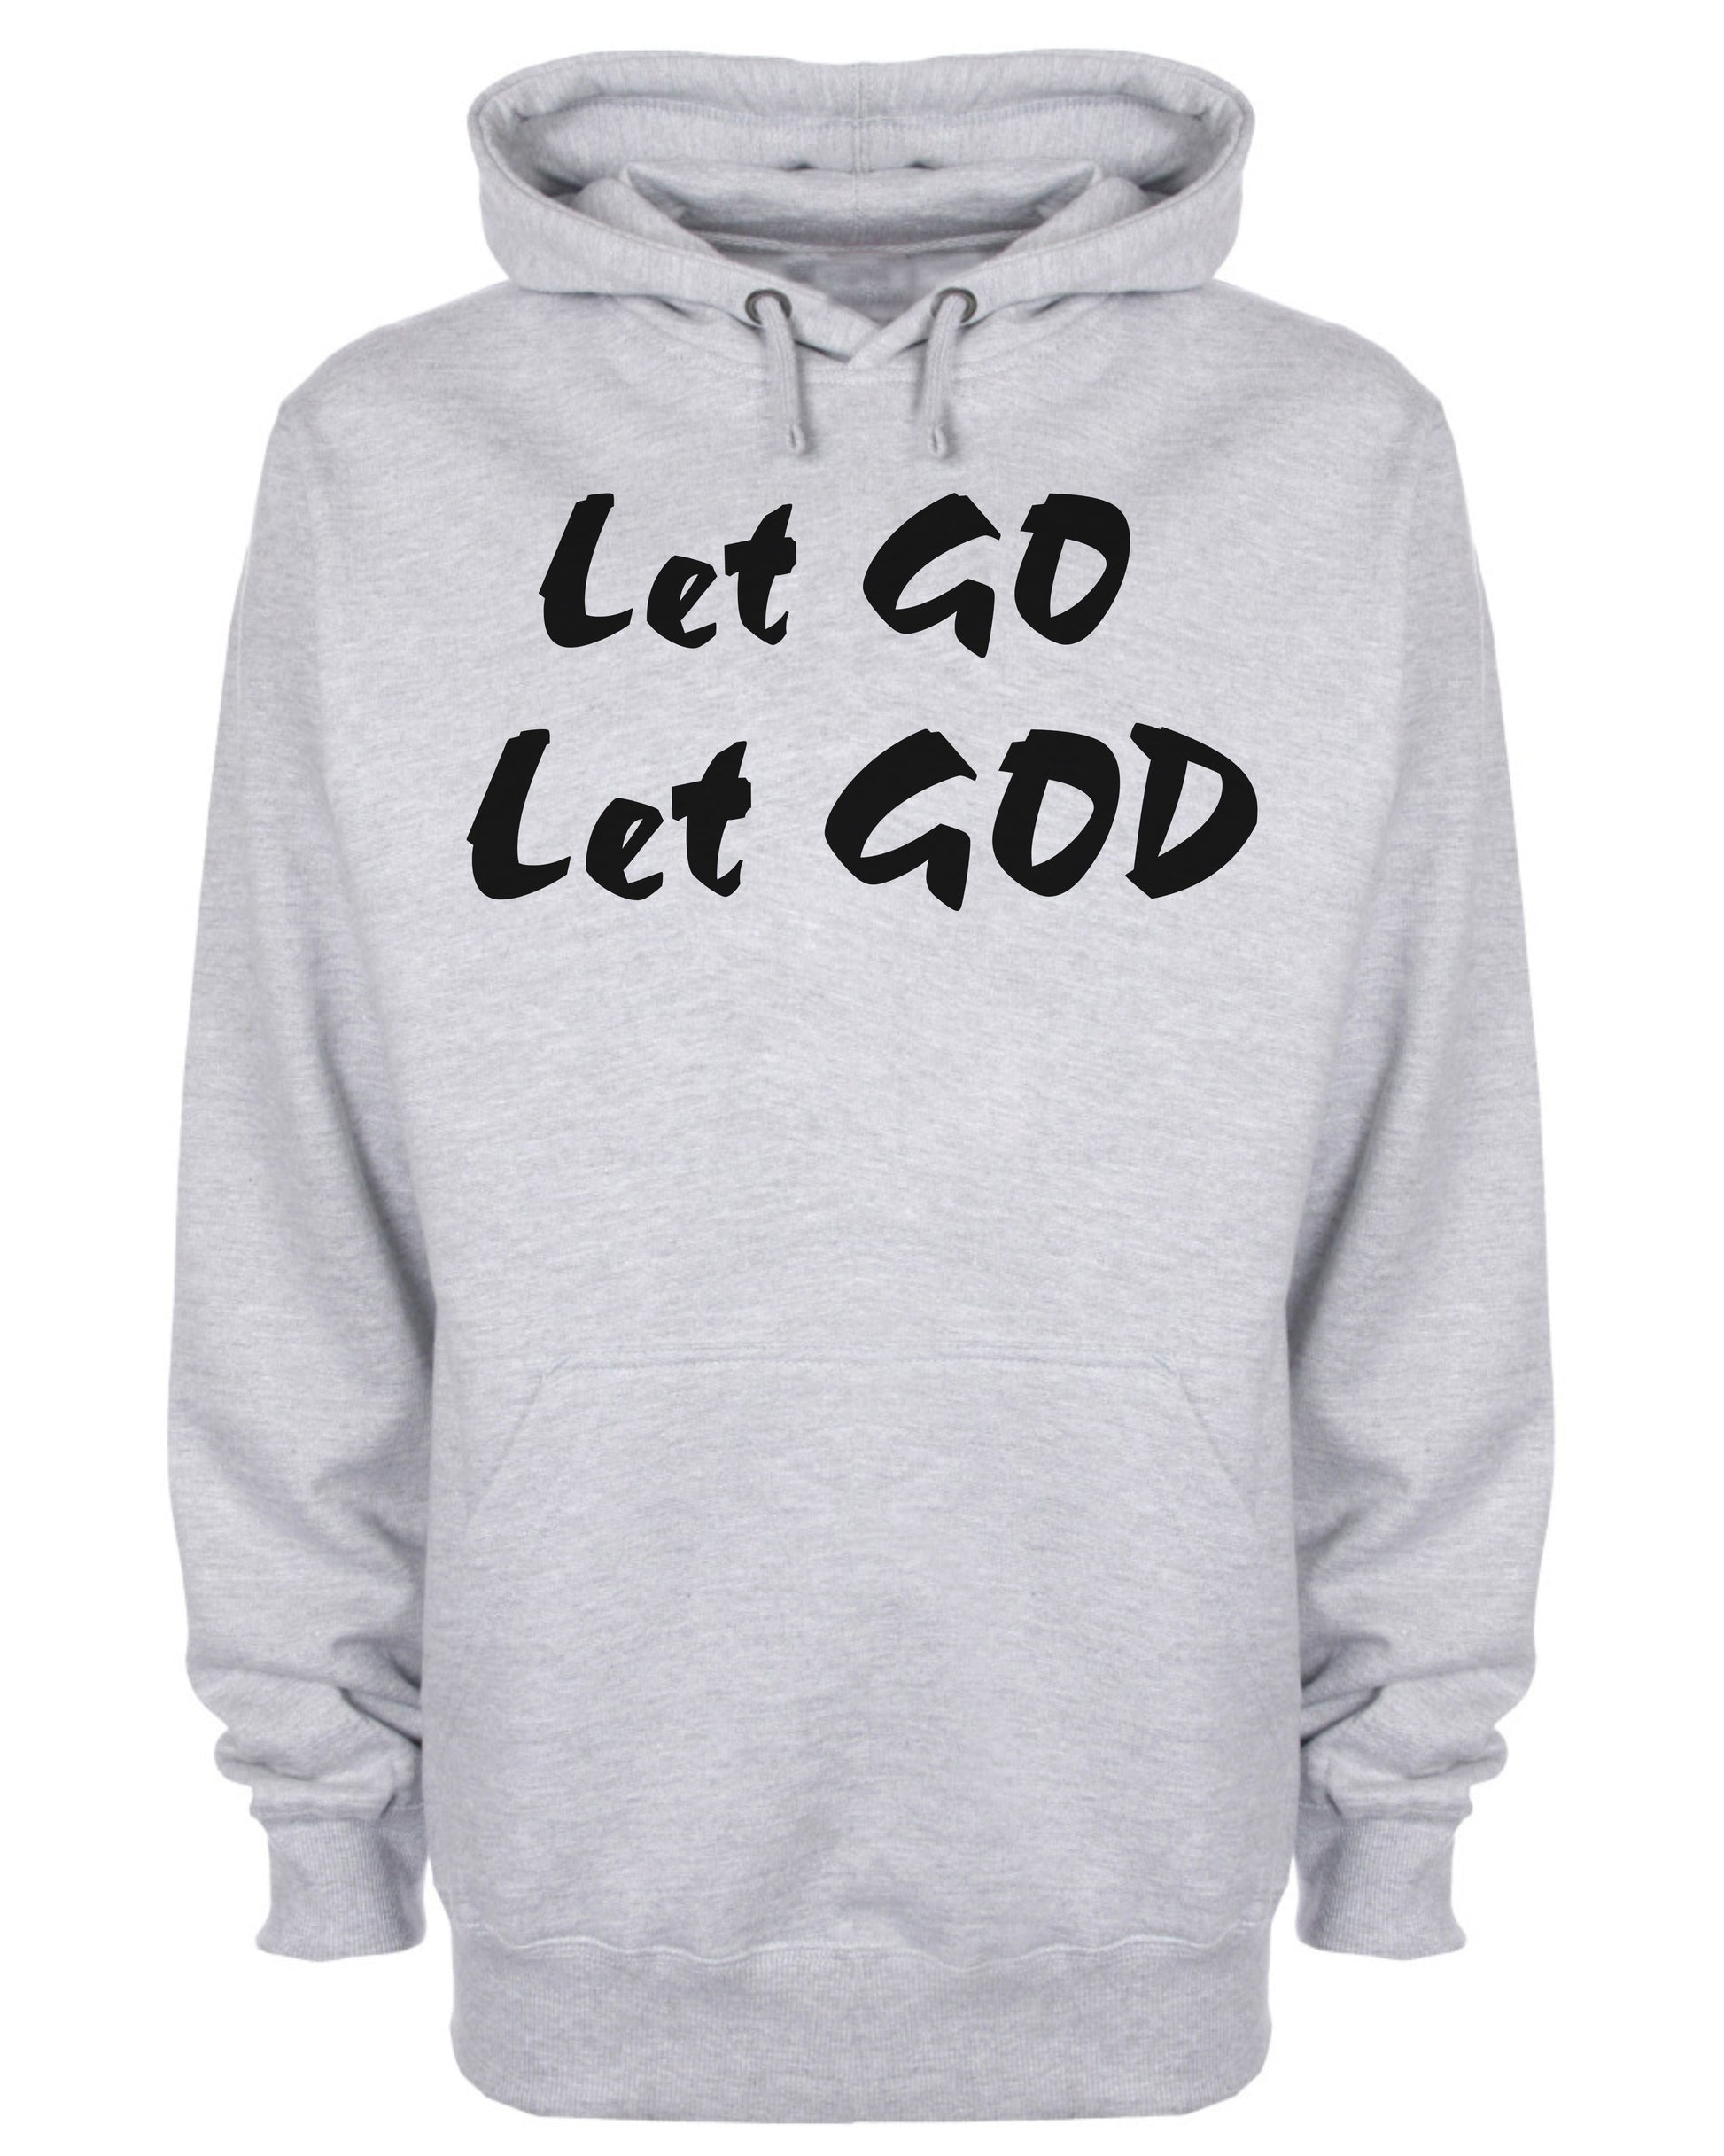 Let Go Let God Hoodie Religious Christian Sweatshirt